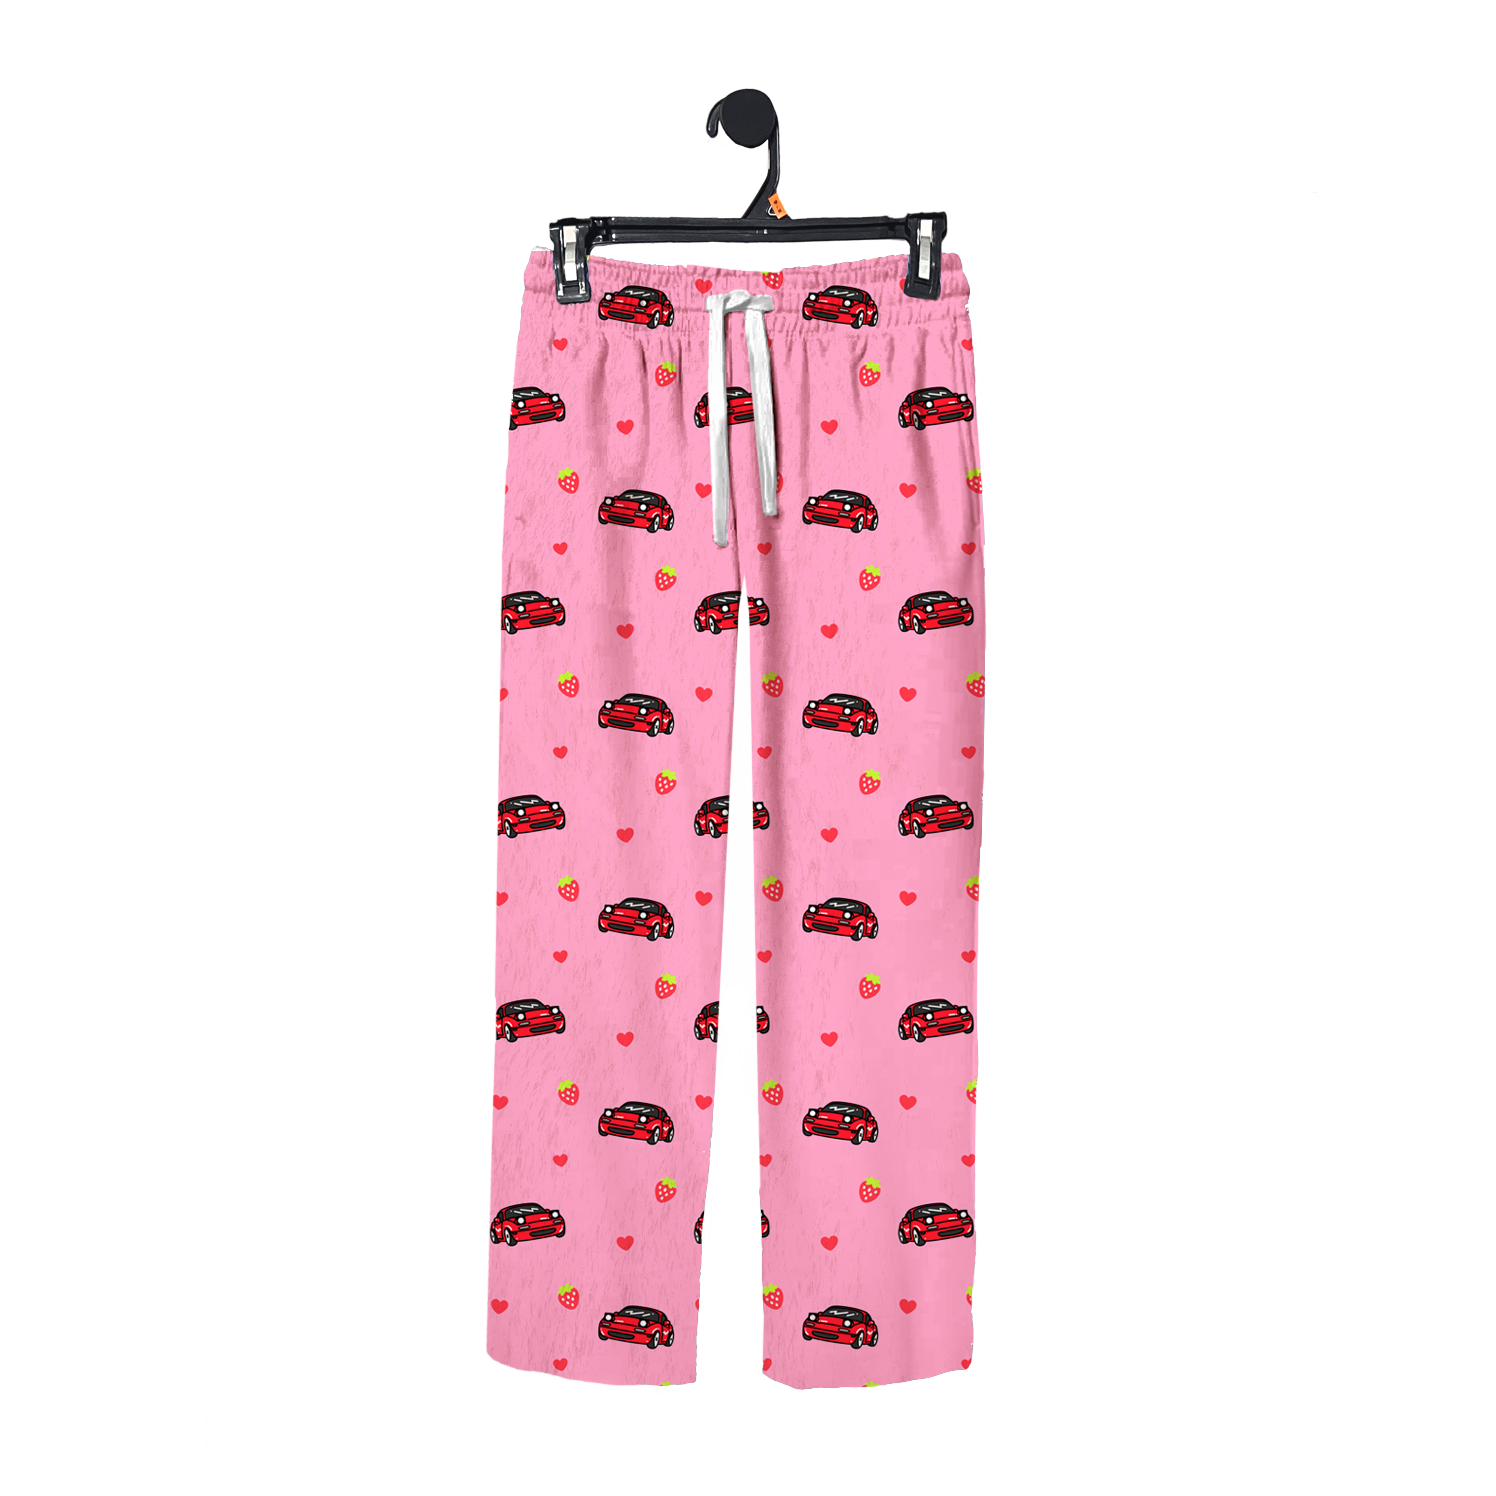 Womens Sleepwear Bottoms - Pyjama Bottoms